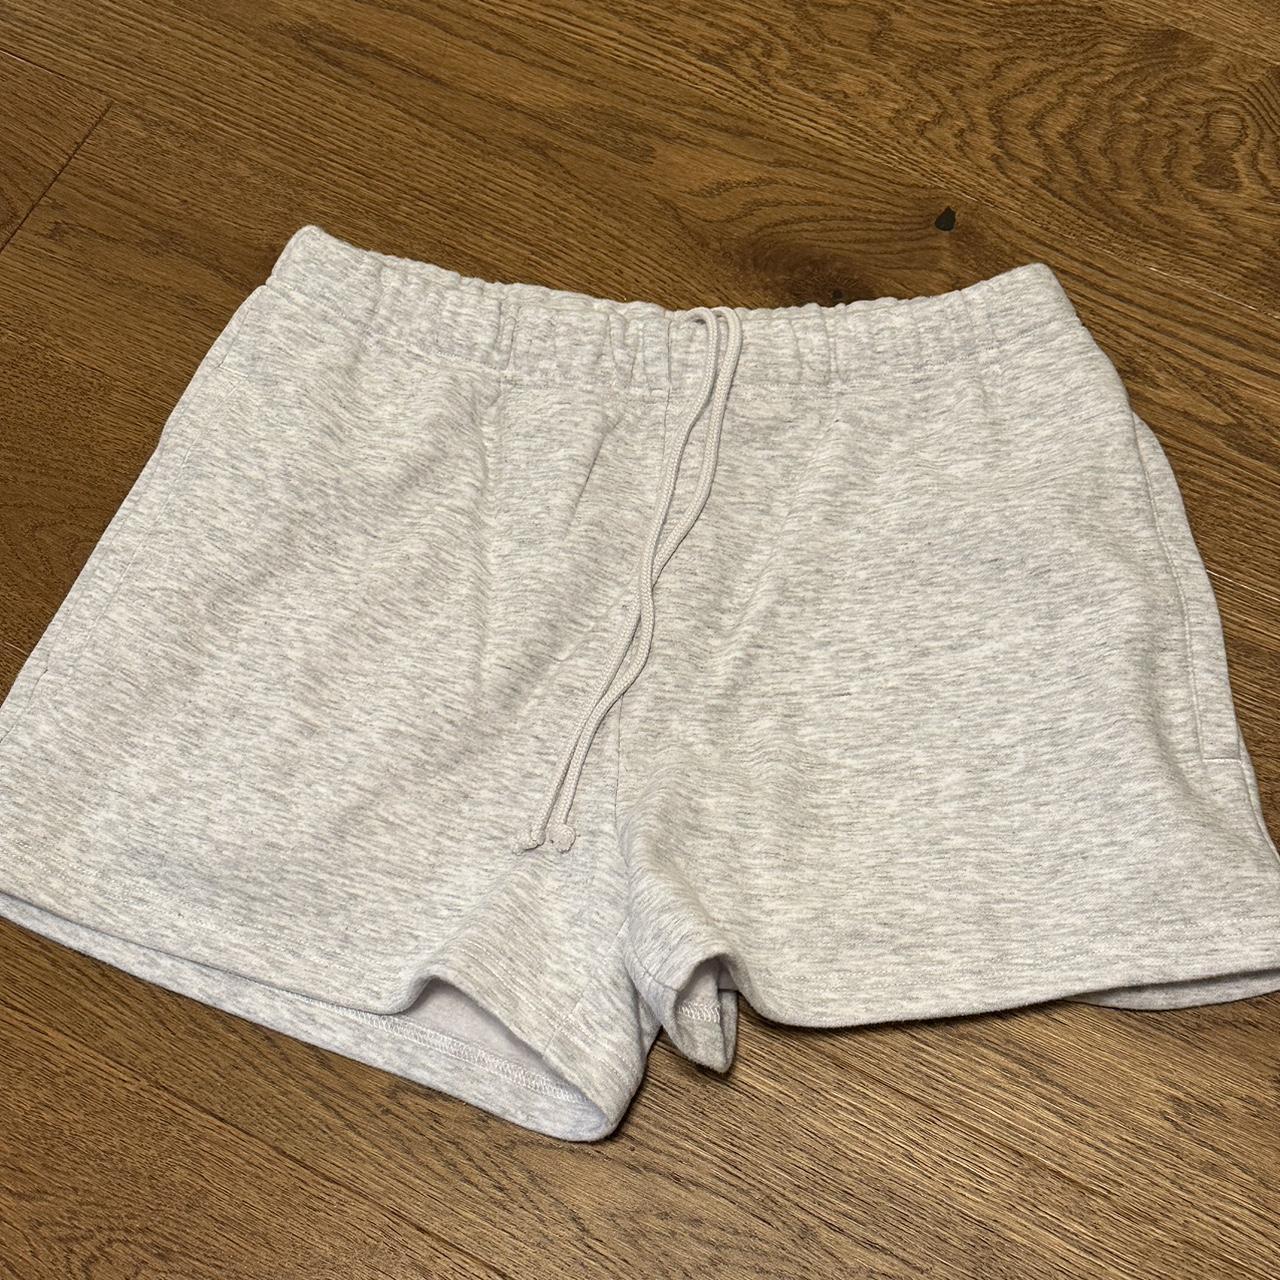 Skims Light Heather Grey Cotton Fleece Shorts